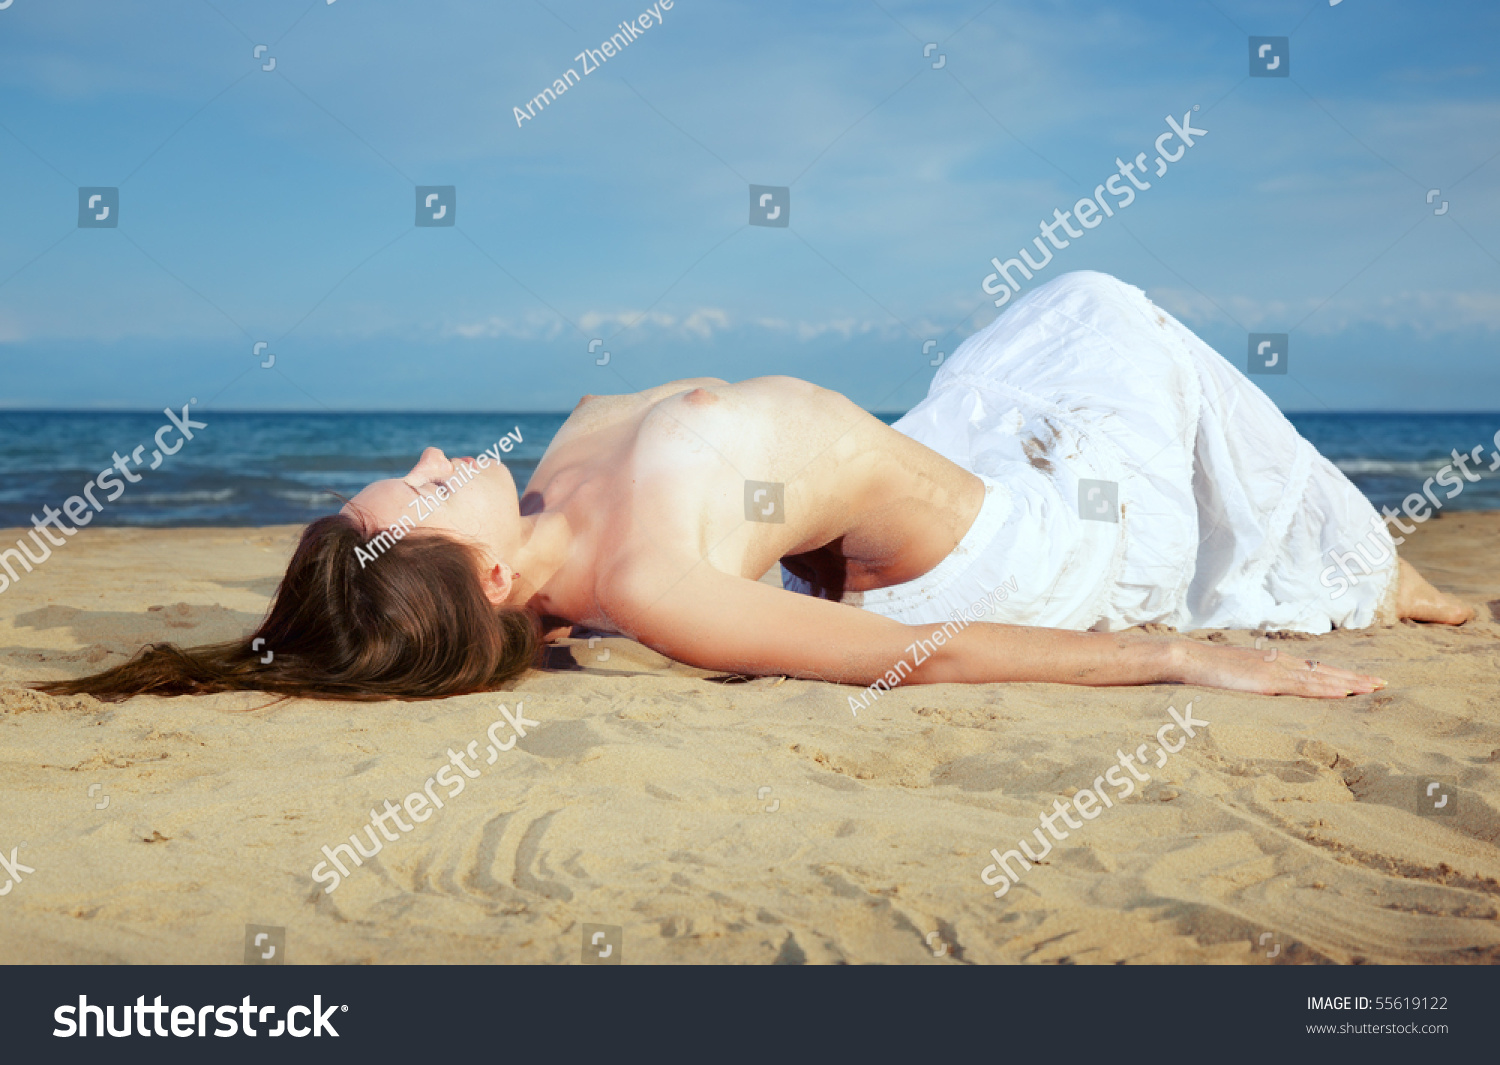 Beach beauties hang out naked below the sun